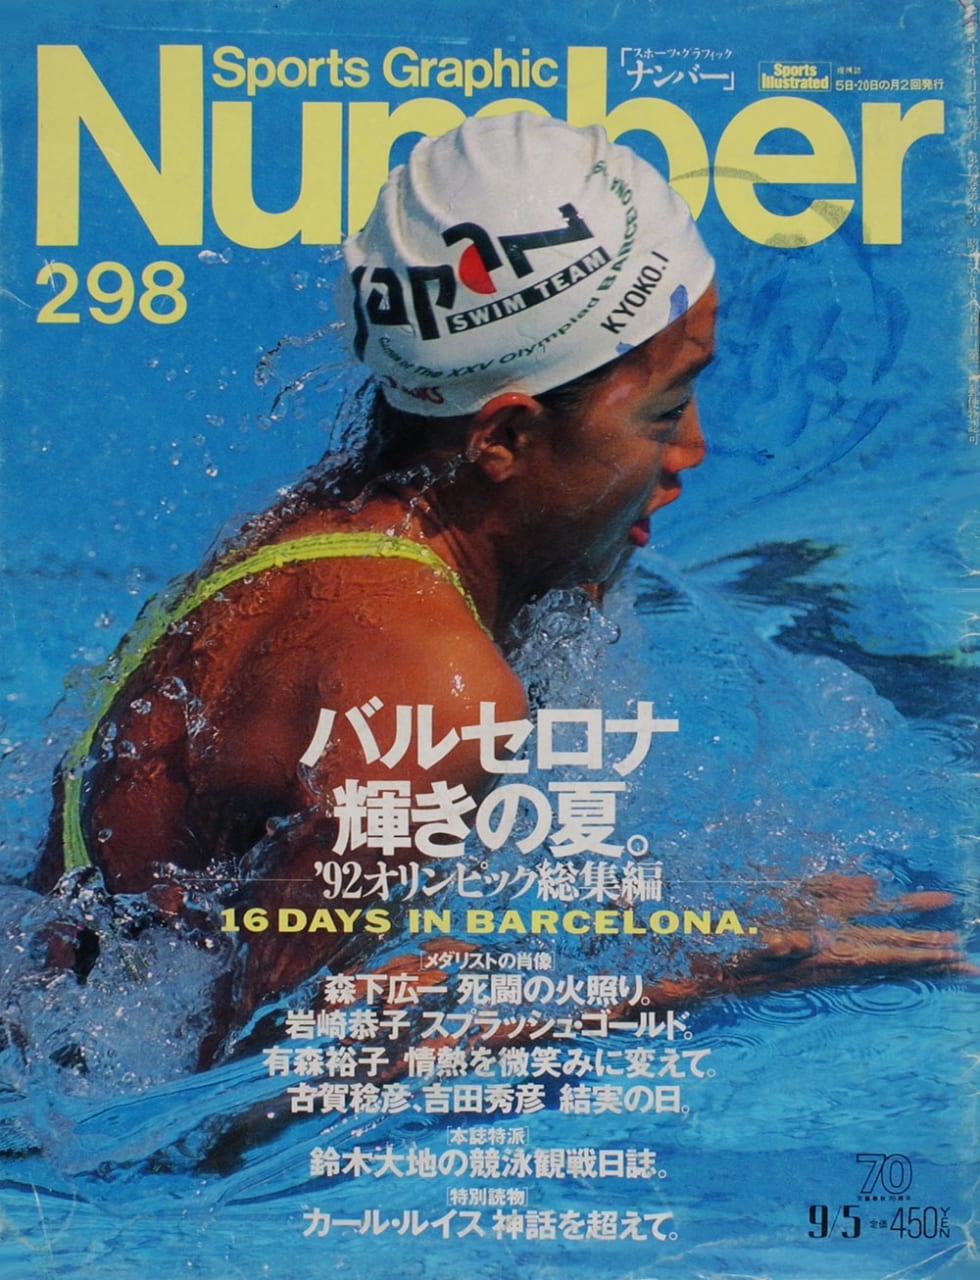 Sports Graphic Number 298号
1992年8月20日発売
表紙撮影：林朋彦